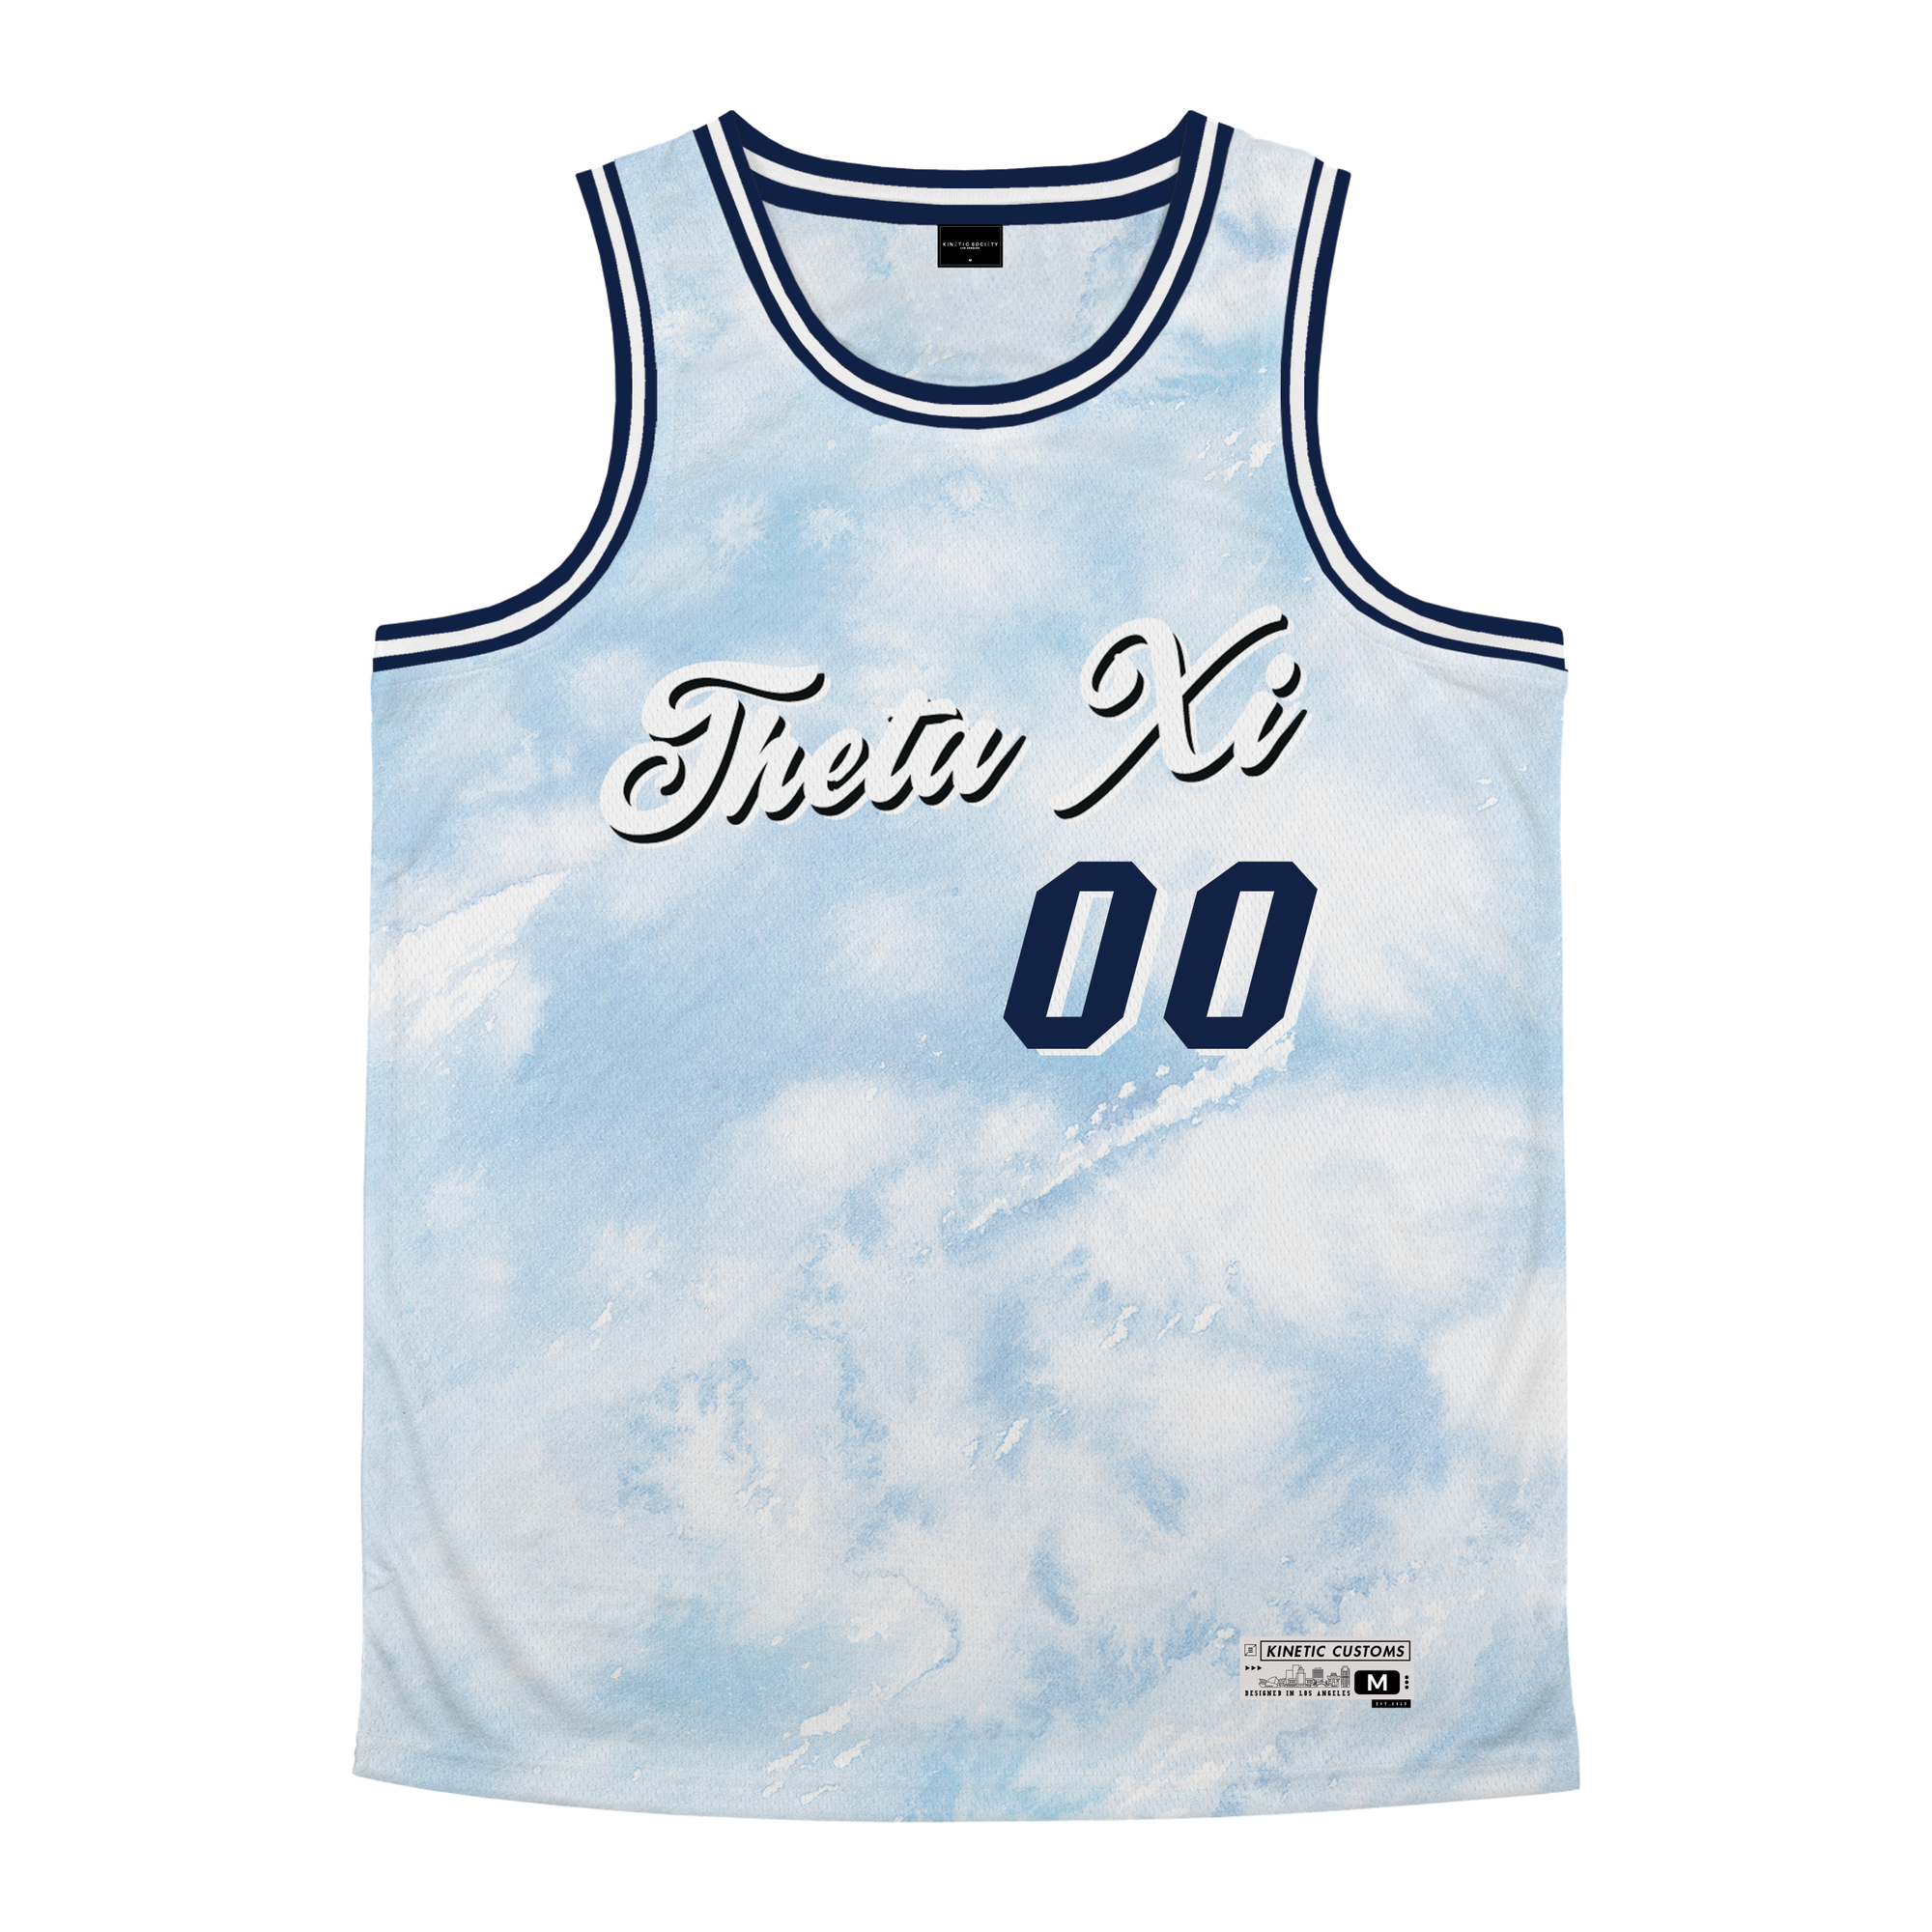 Theta Xi - Blue Sky Basketball Jersey